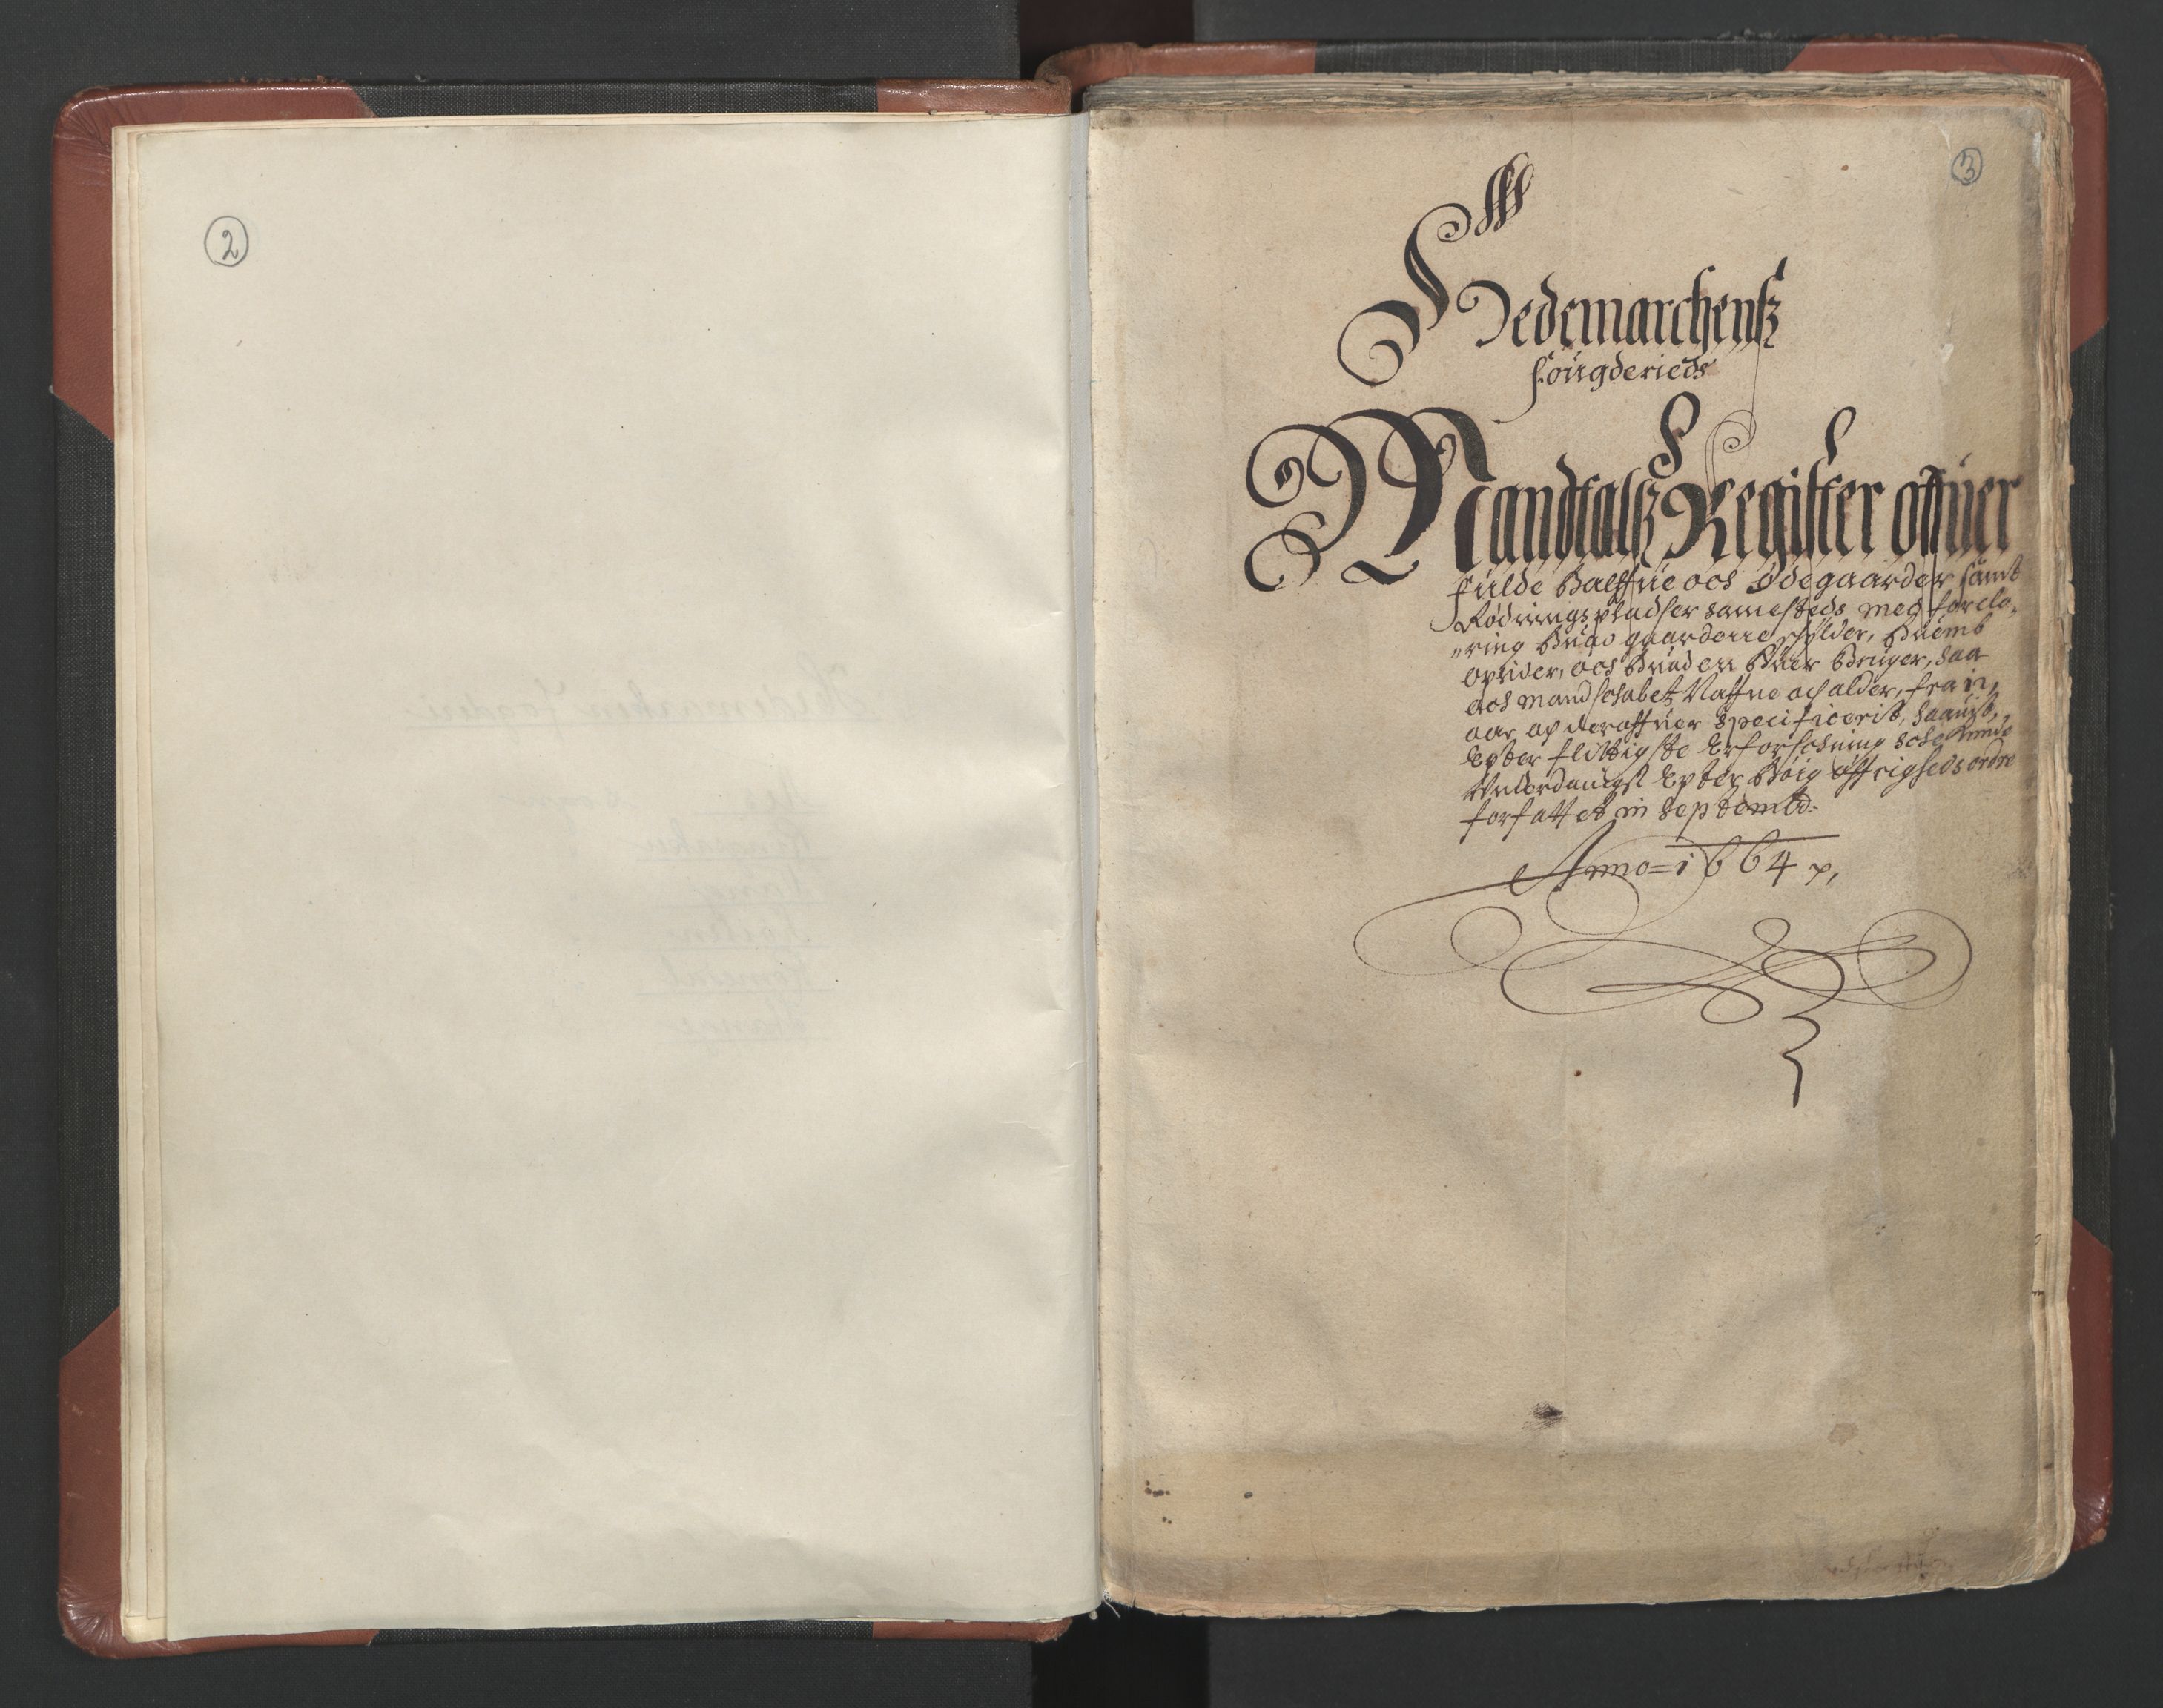 RA, Fogdenes og sorenskrivernes manntall 1664-1666, nr. 3: Hedmark fogderi og Solør, Østerdal og Odal fogderi, 1664, s. 2-3